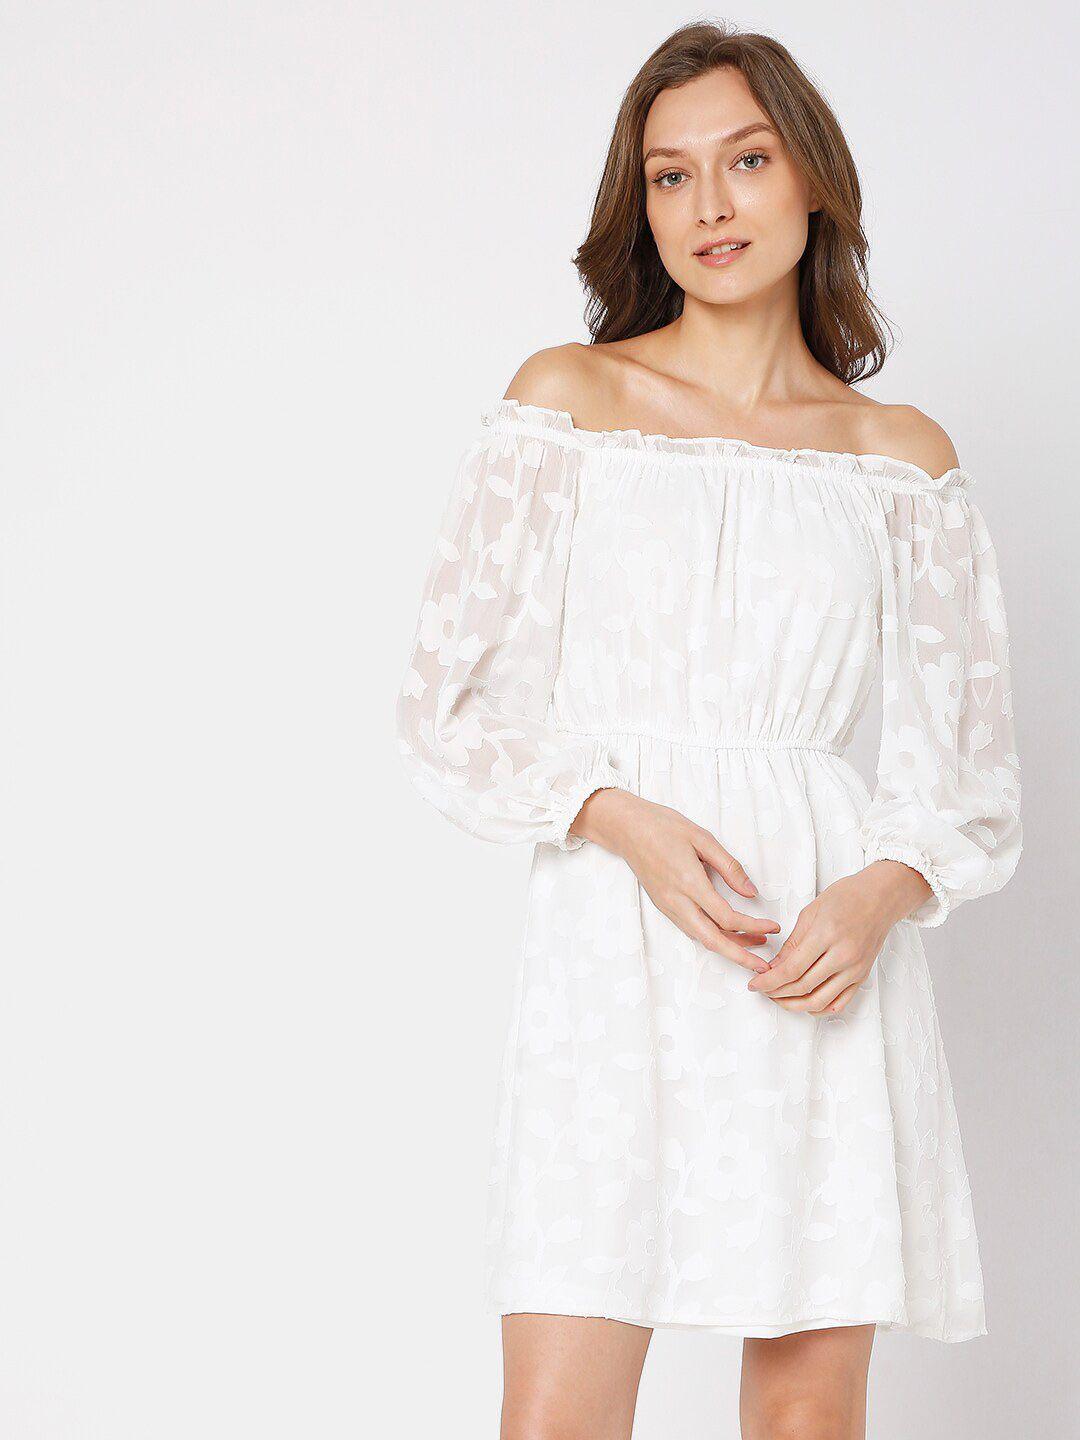 vero moda white floral off-shoulder dress